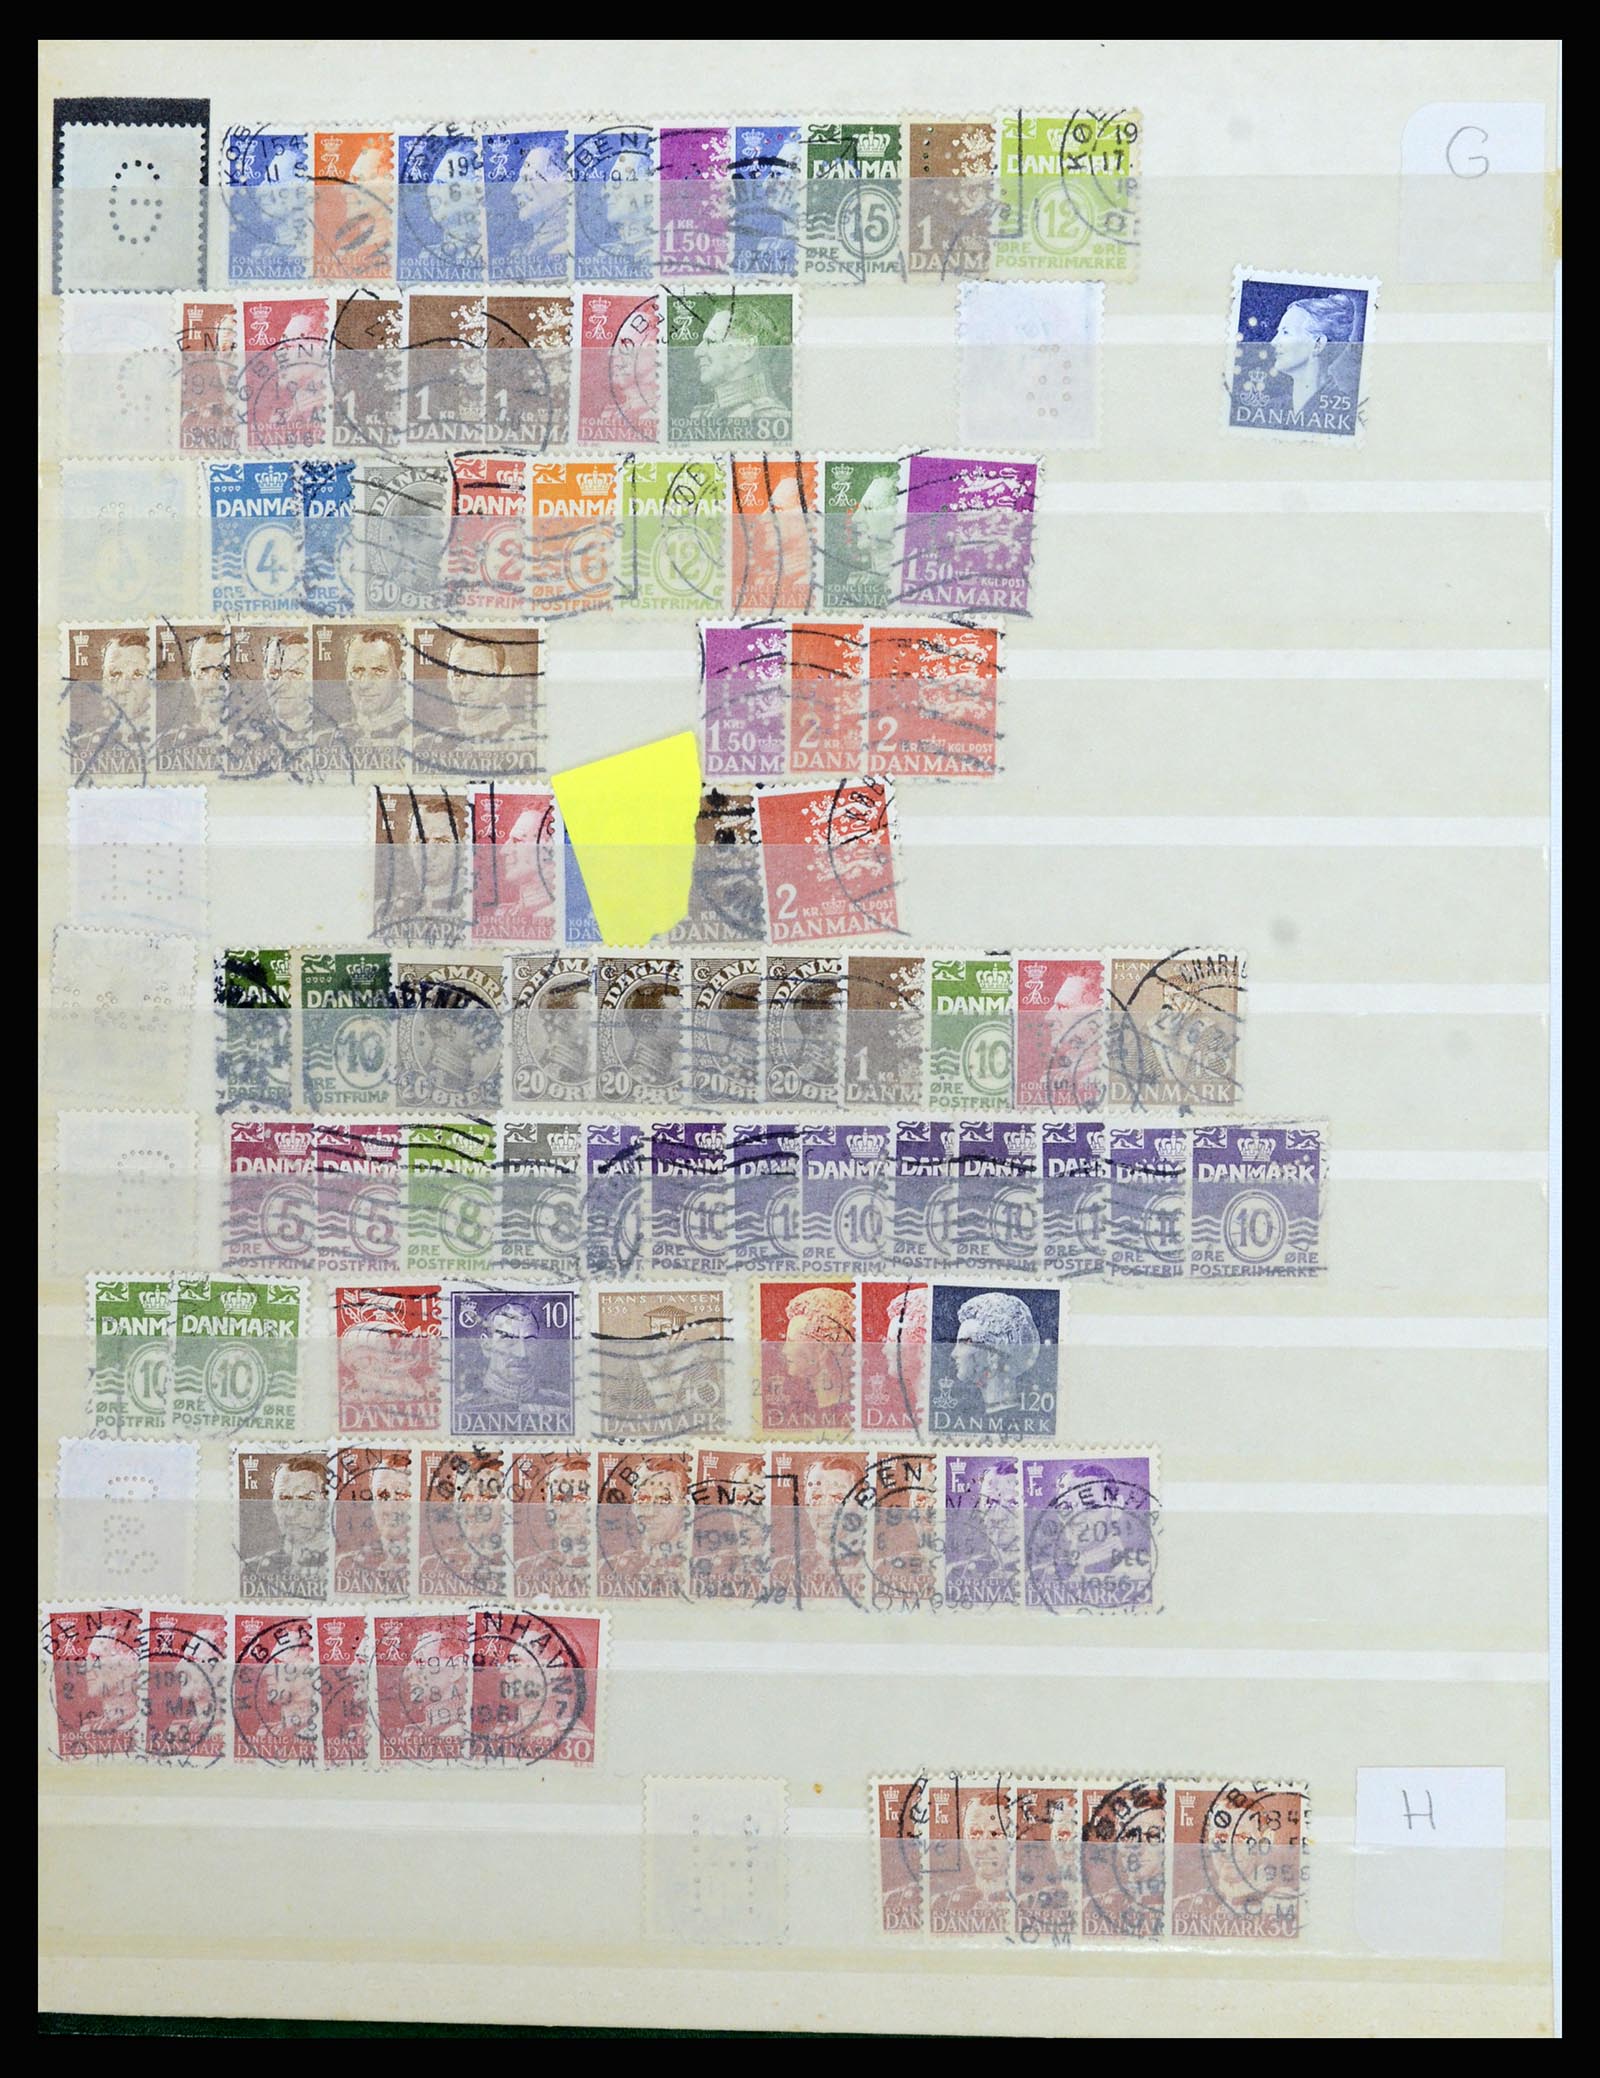 37056 074 - Stamp collection 37056 Denmark perfins.